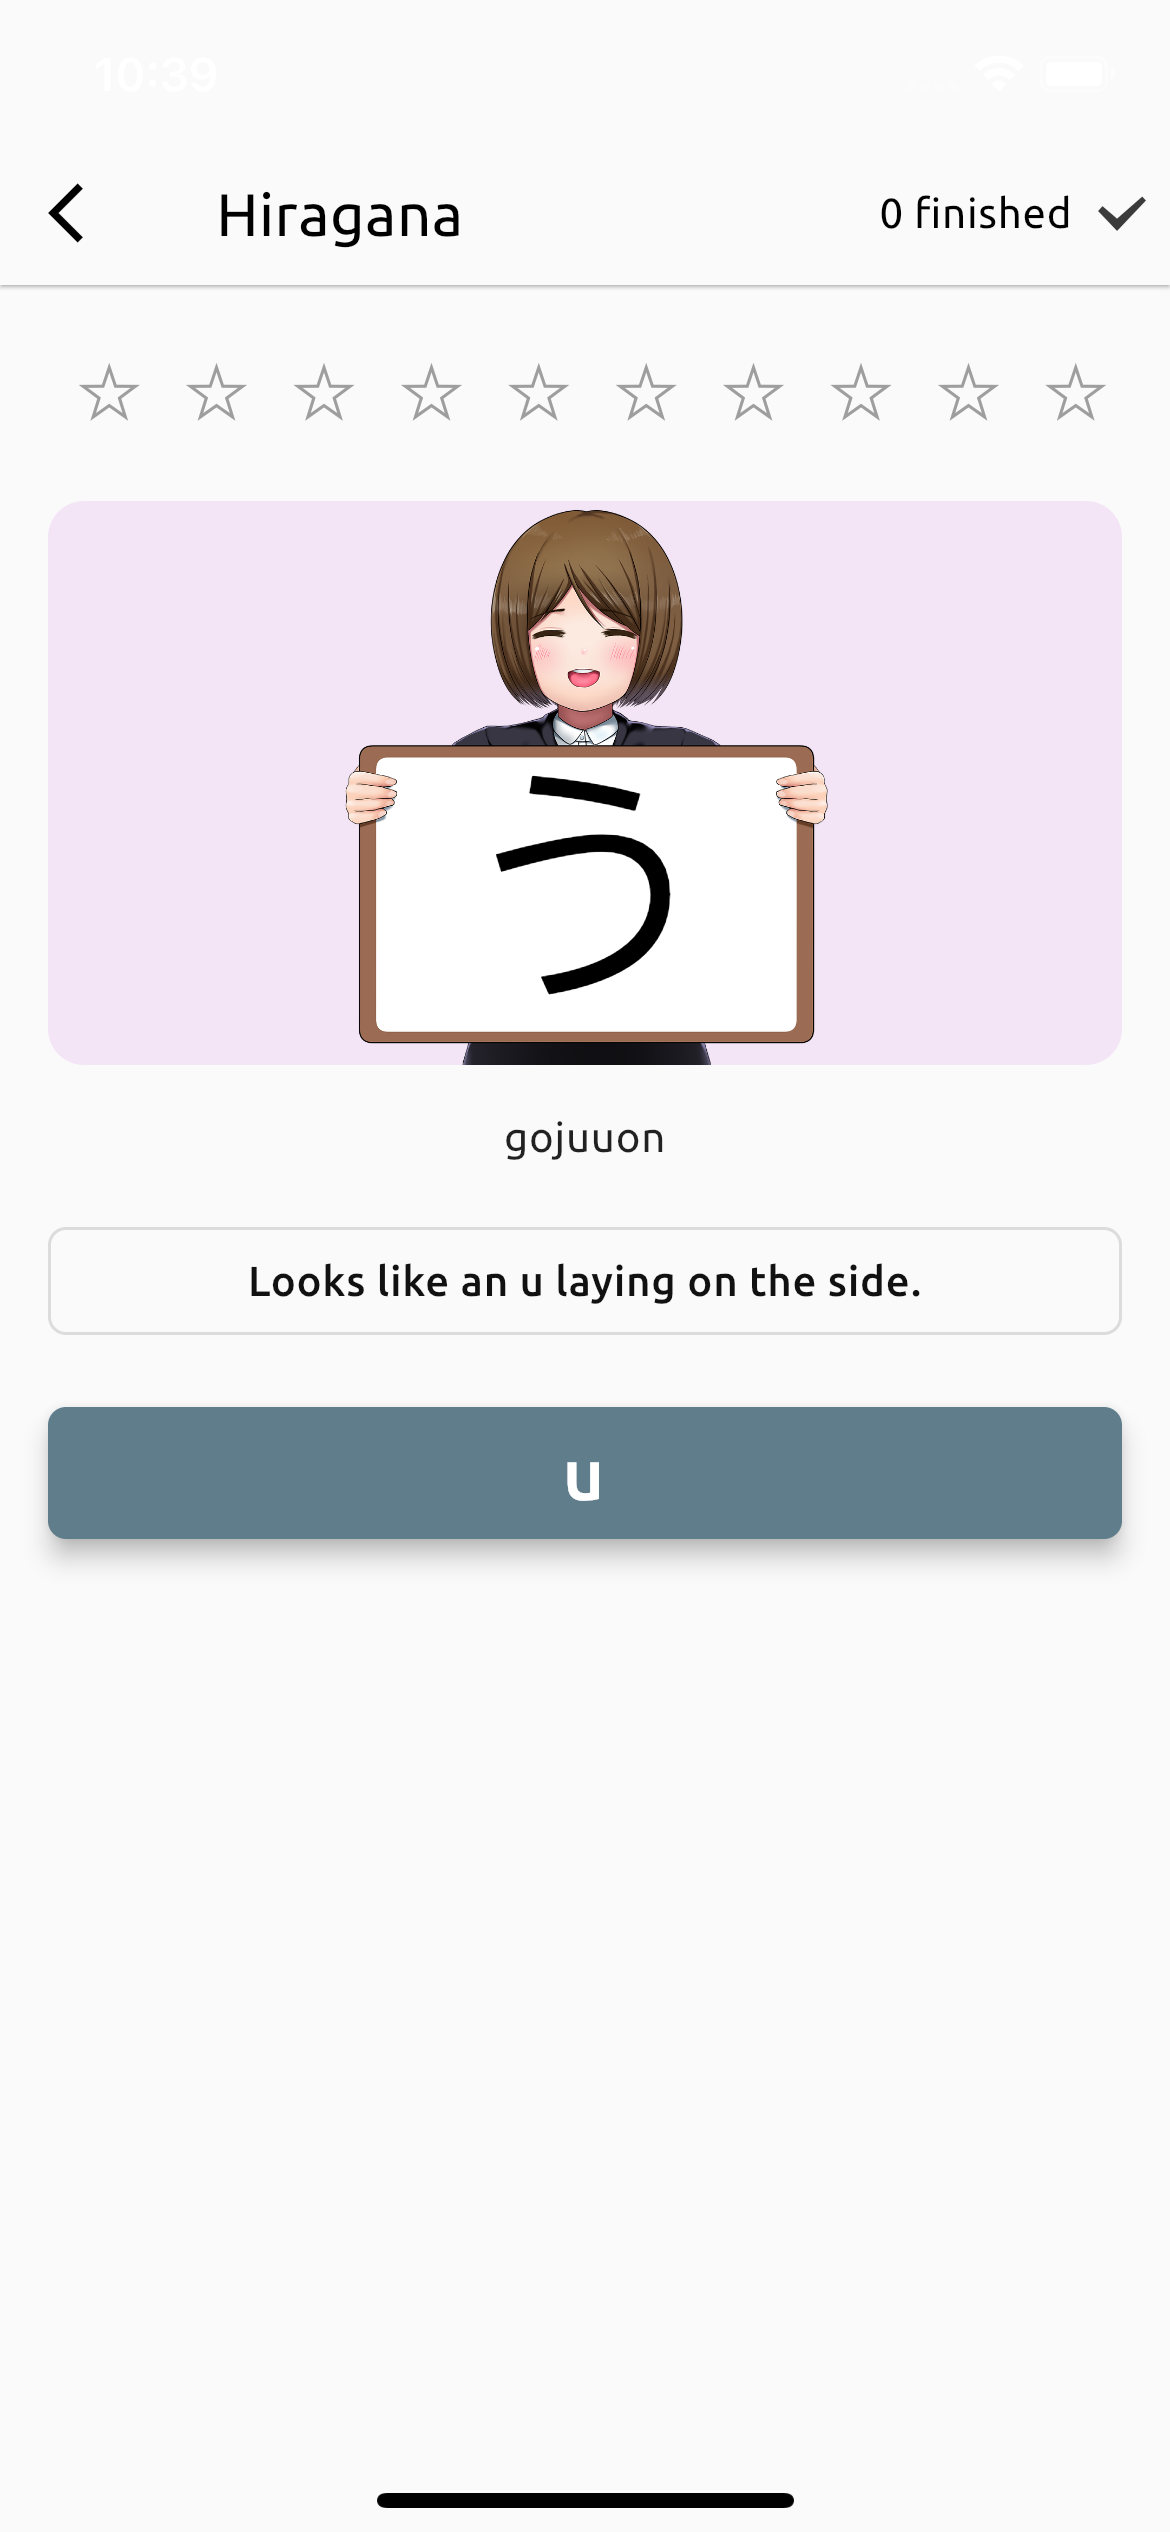 Simple Flutter app to learn Japanese writing systems Hiragana, Katakana and Kanji